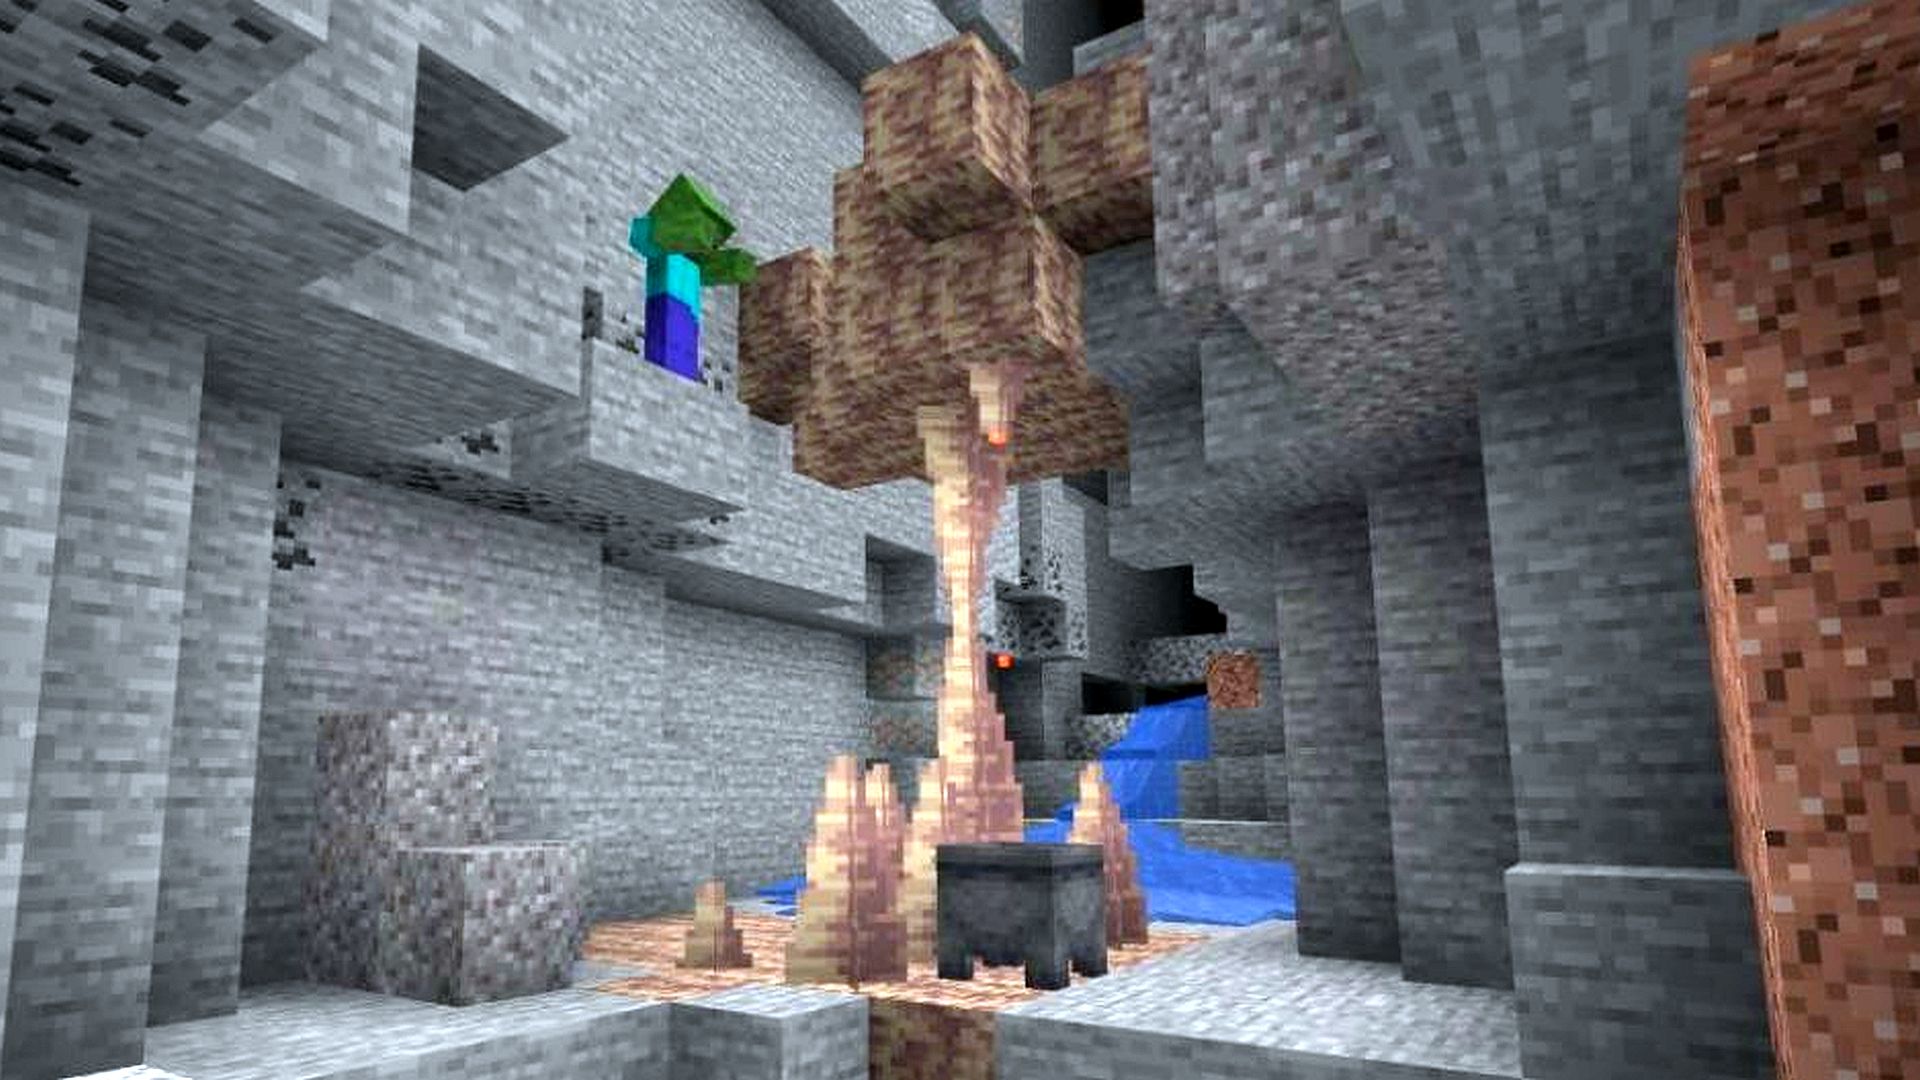 Minecraft caves and cliffs update